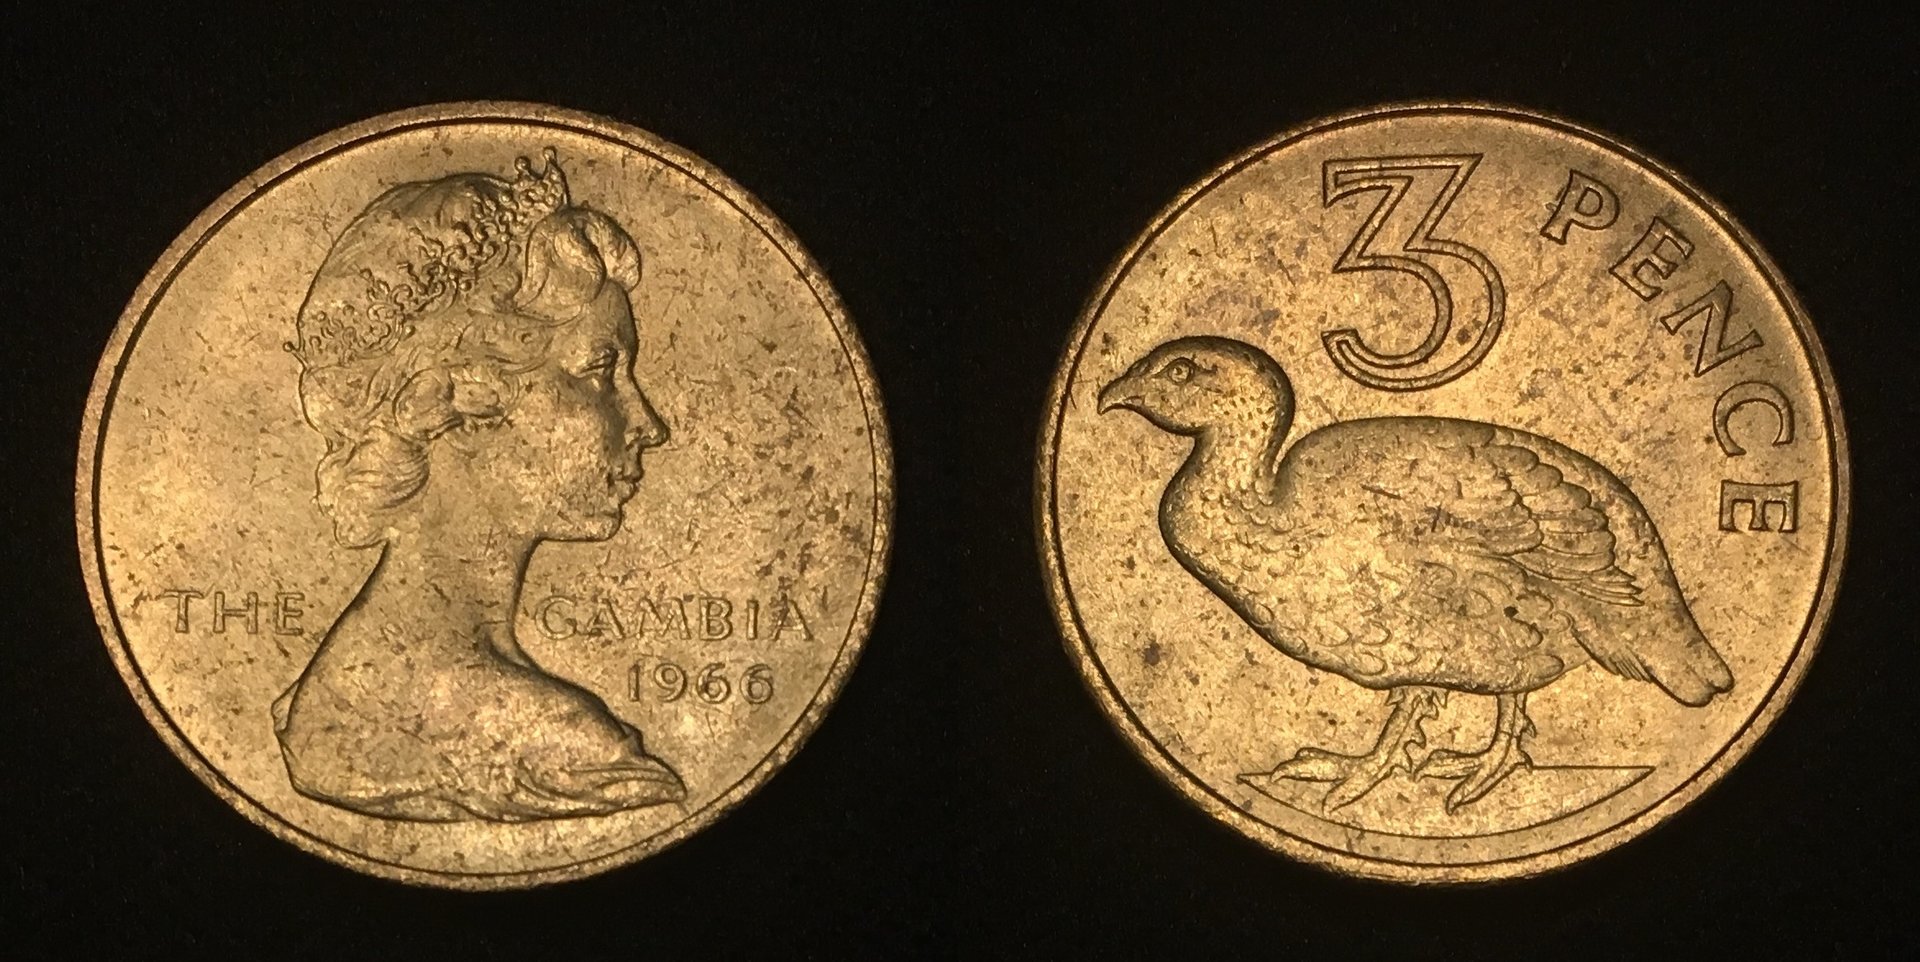 1966 3 Pence Combined.jpg